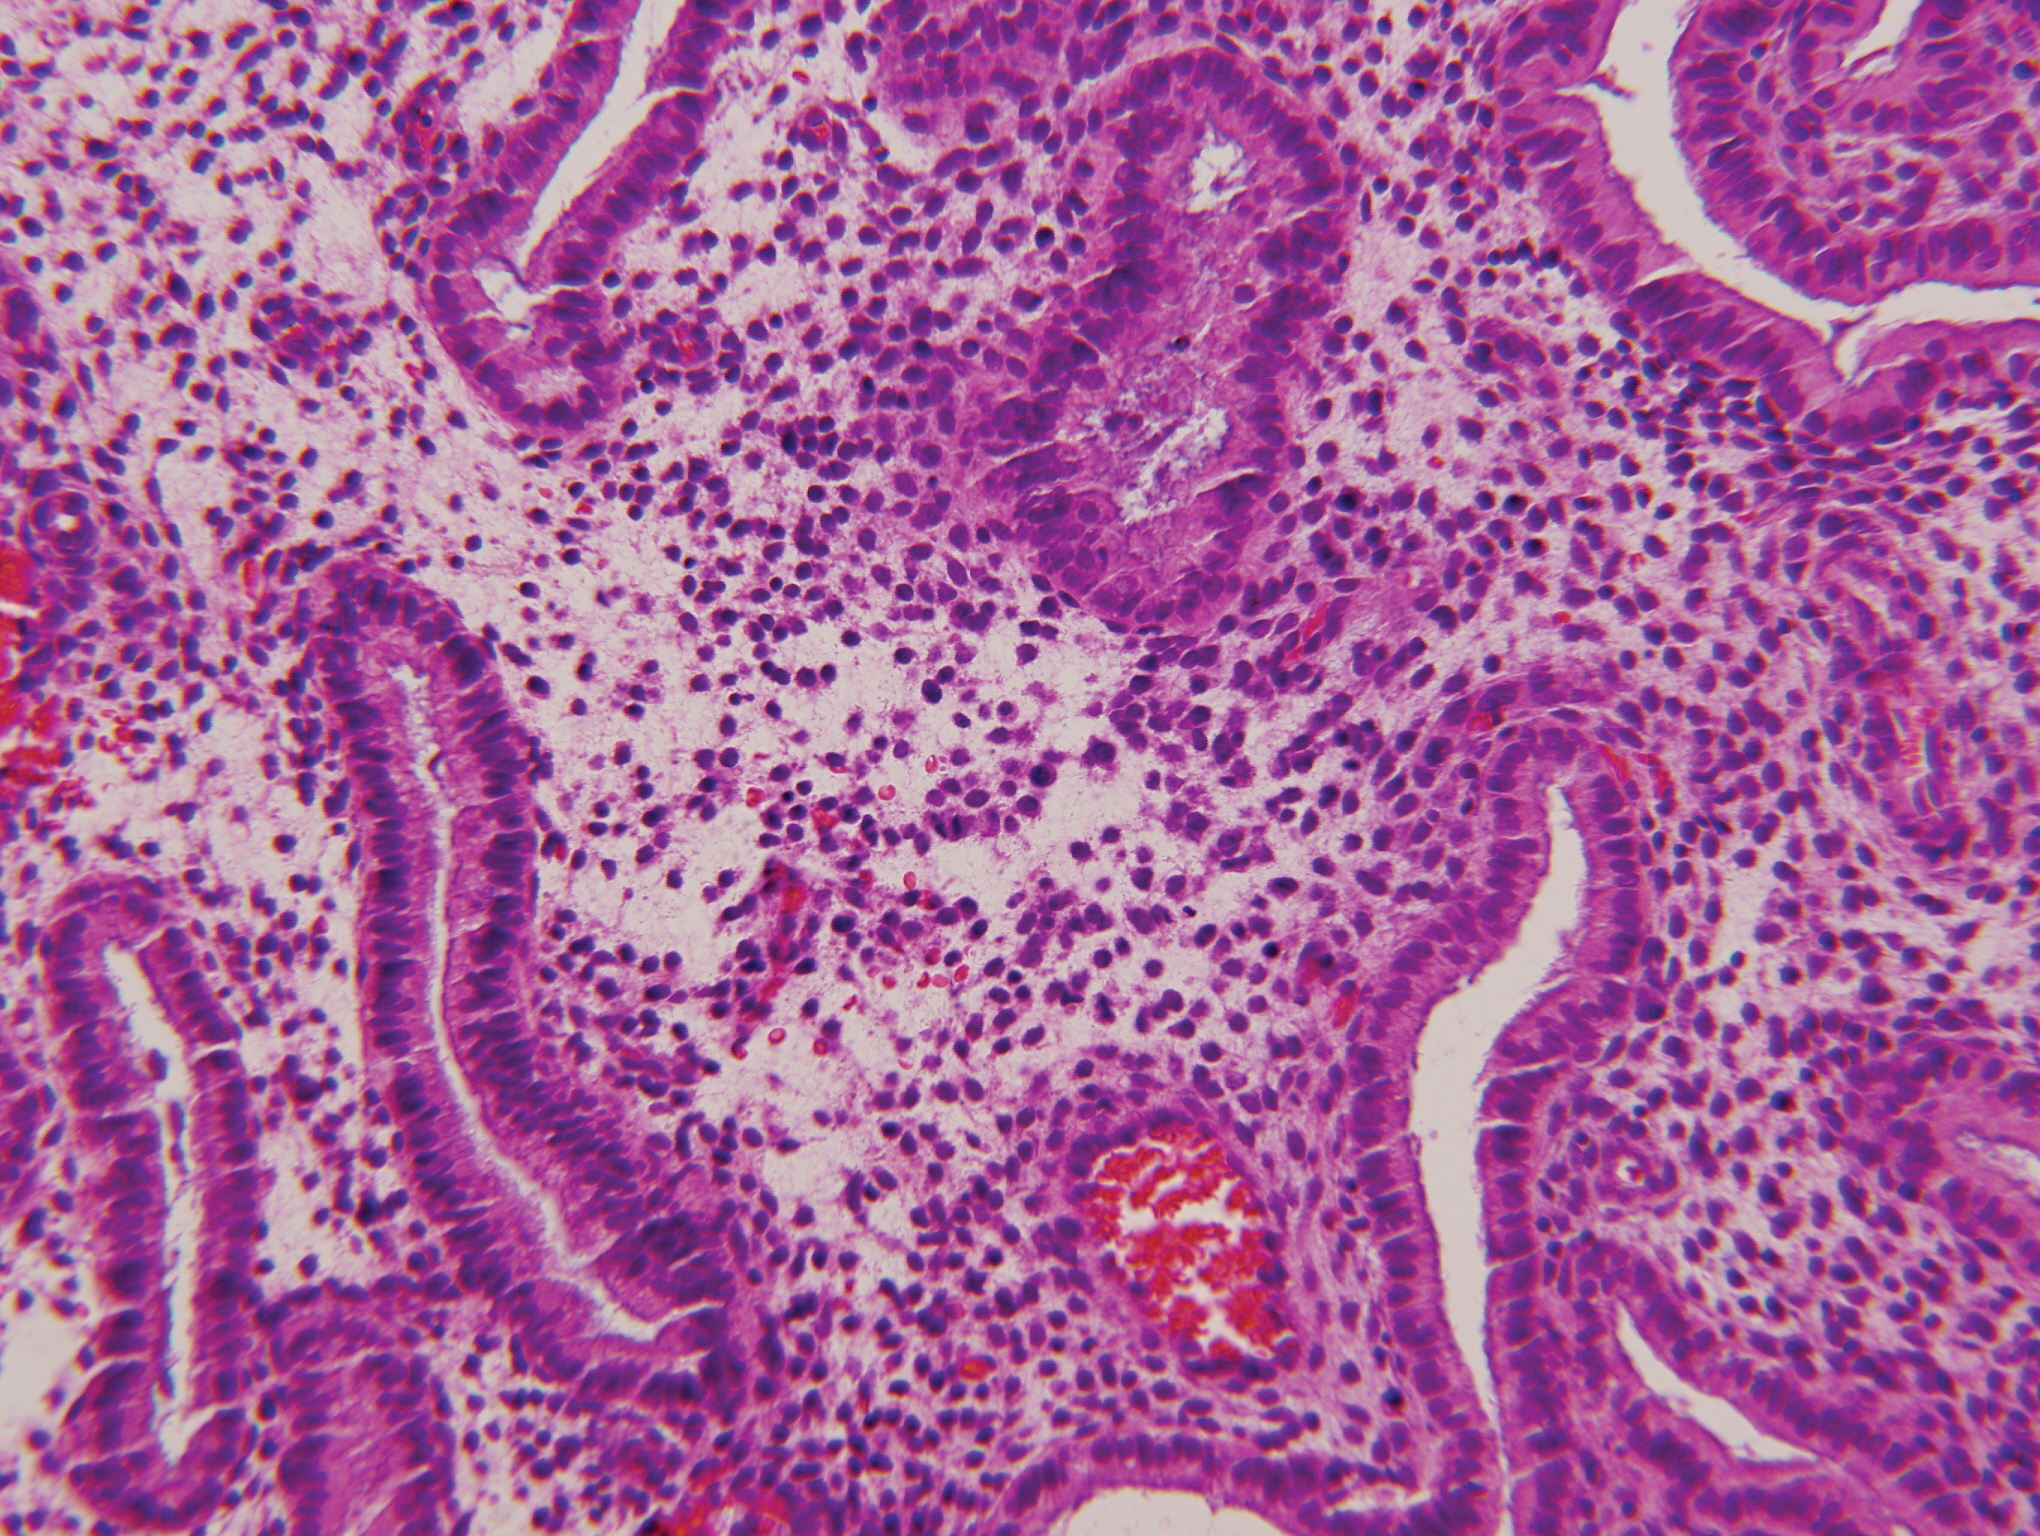 Histology secretory endometrium Histological patterns